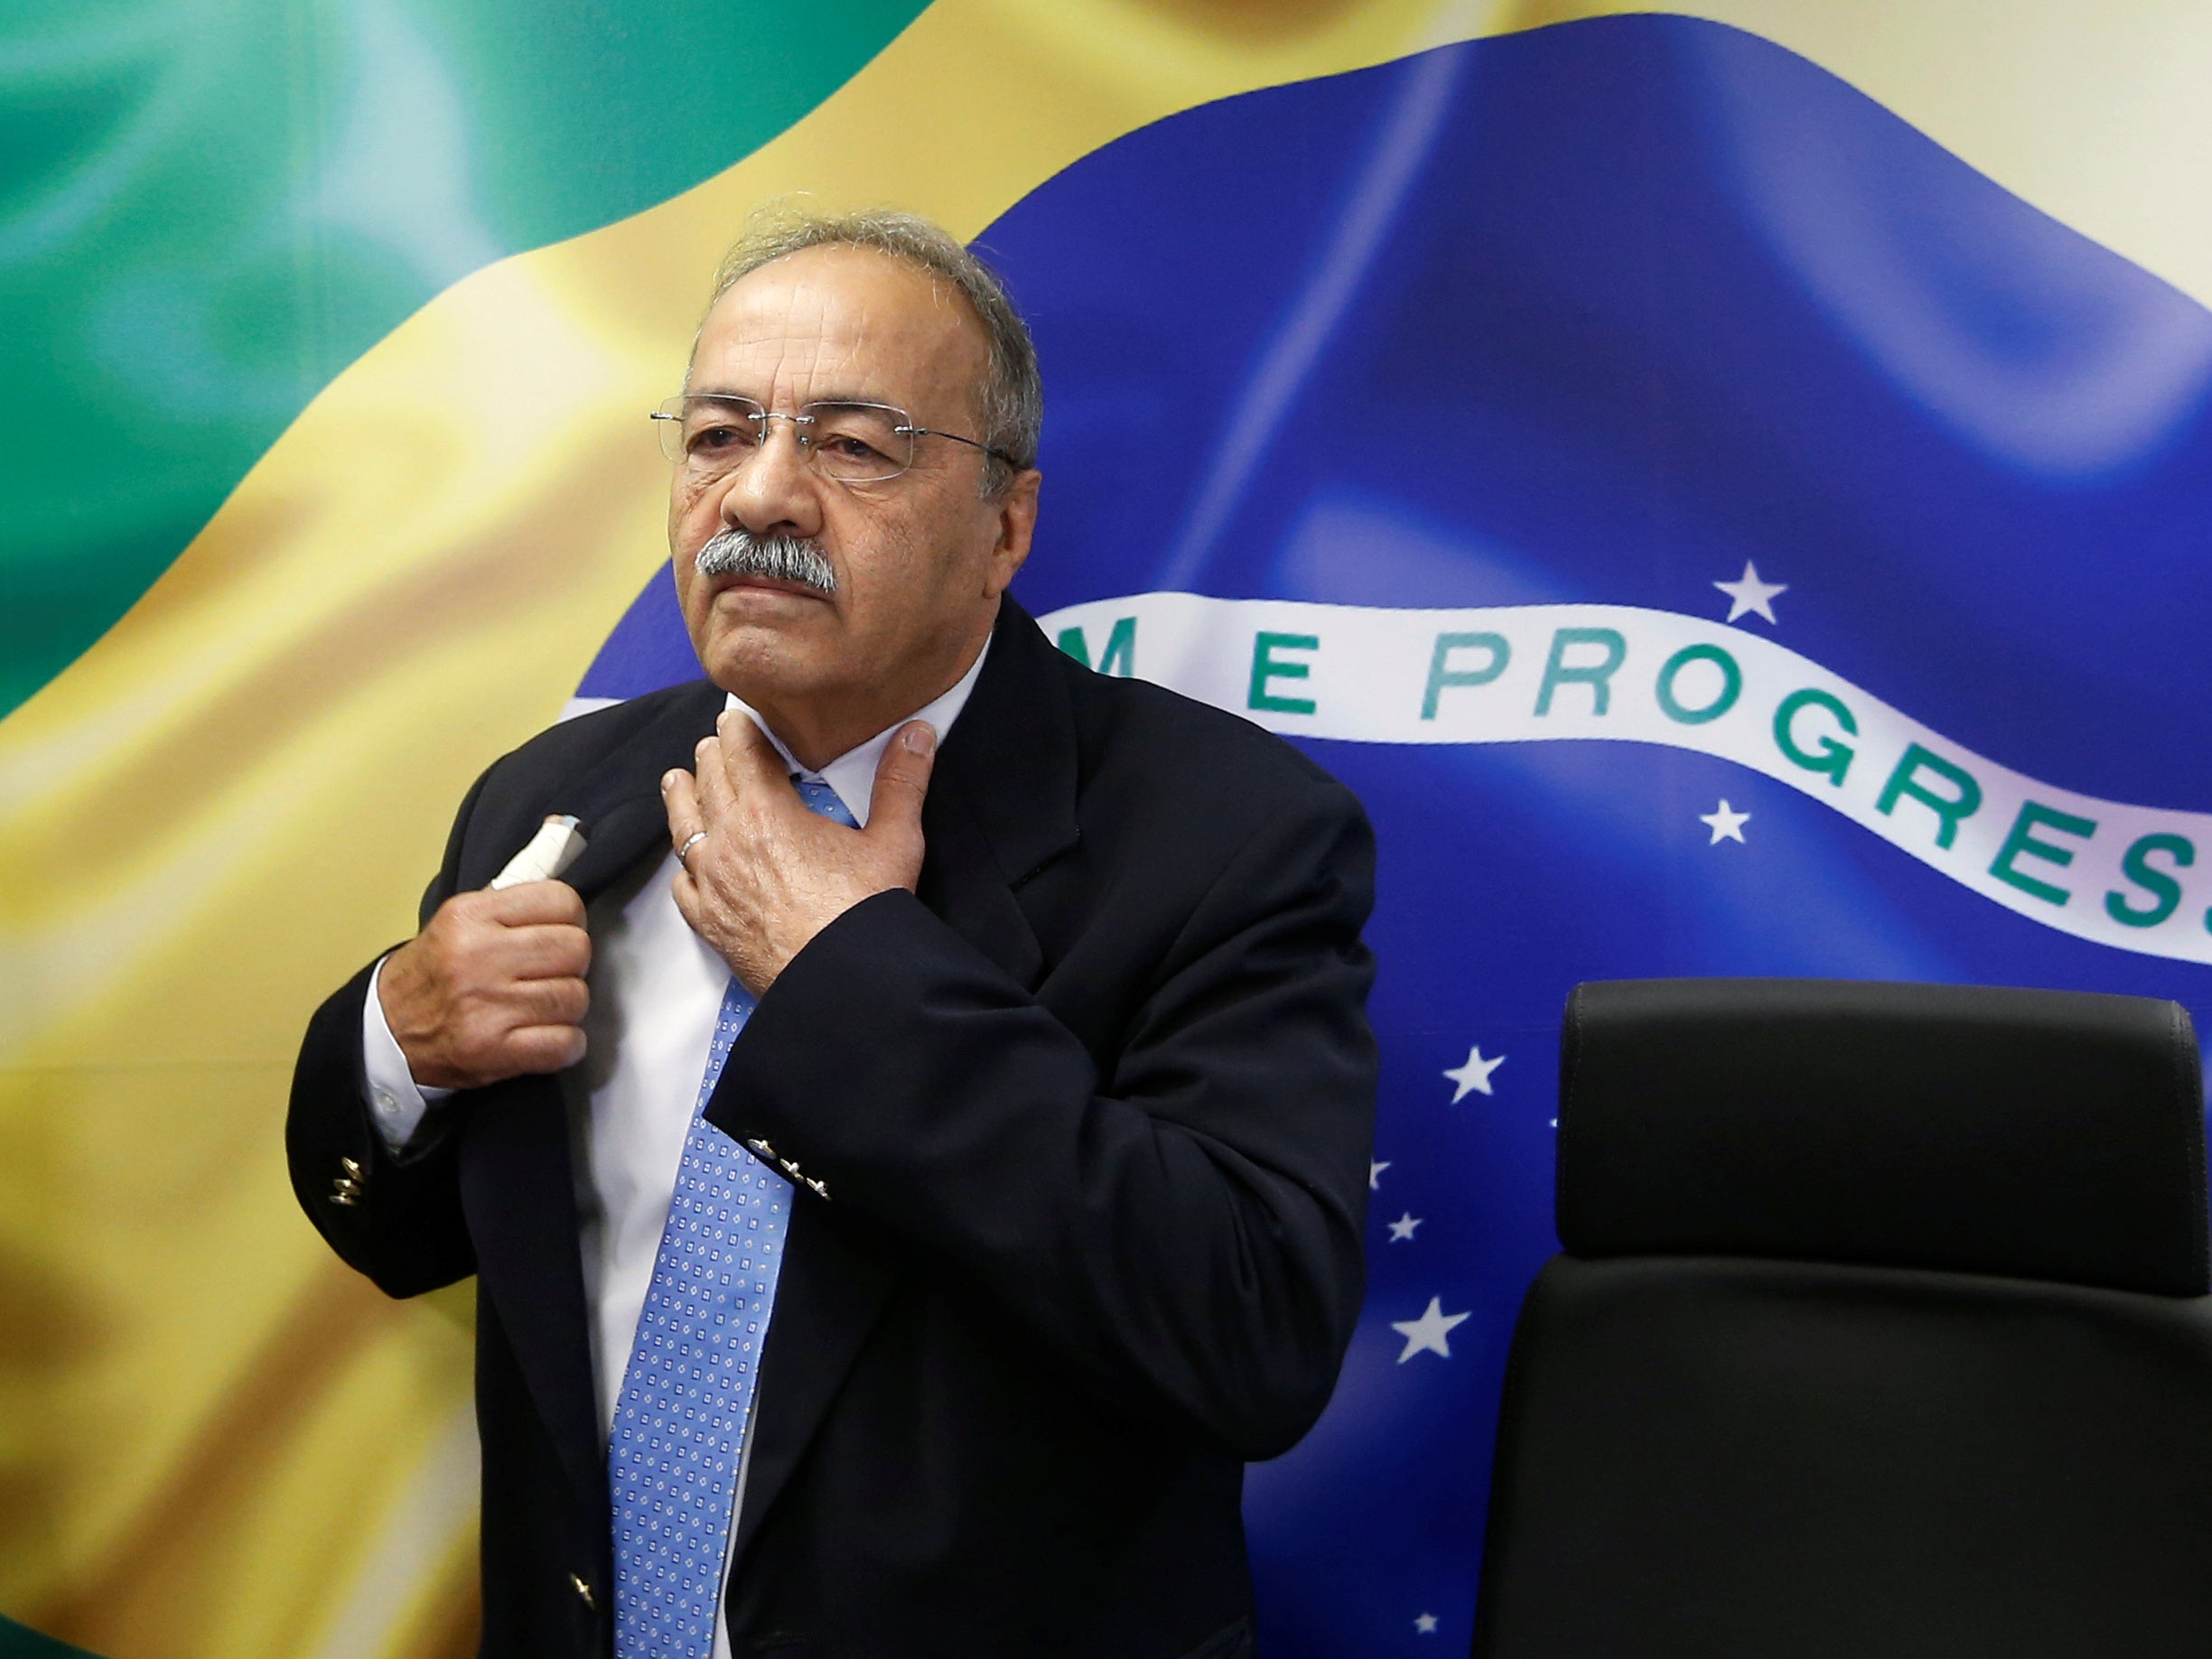 Police found £4,500 hidden in Brazilian senator Chico Rodrigues’ underpants